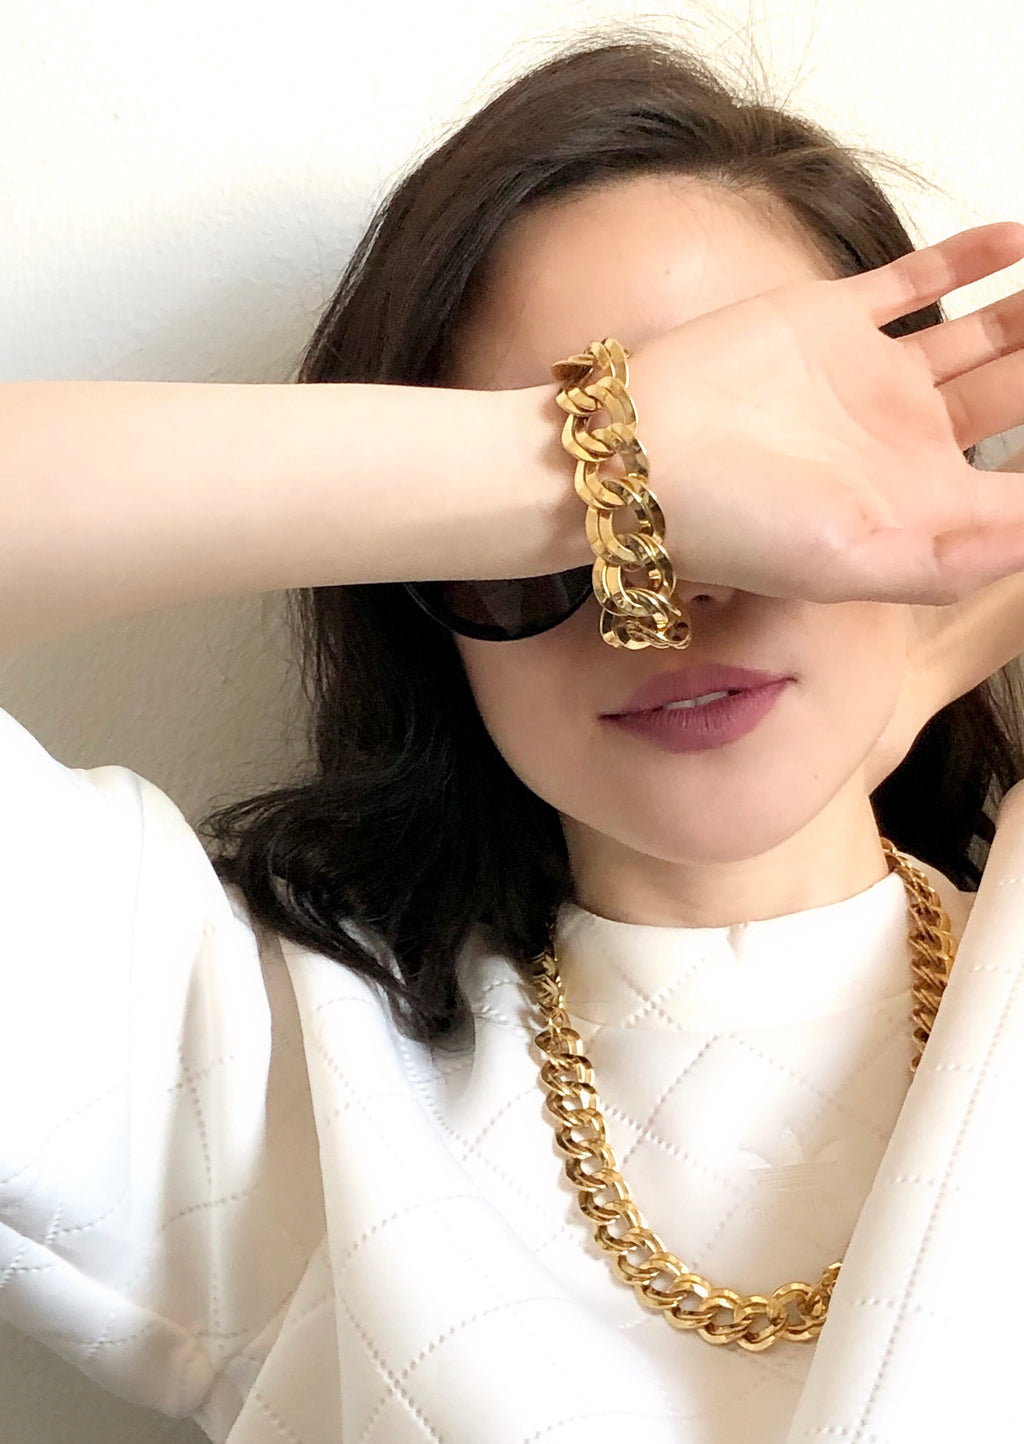 Monet Chunky Gold Double Curb Chain Bracelet